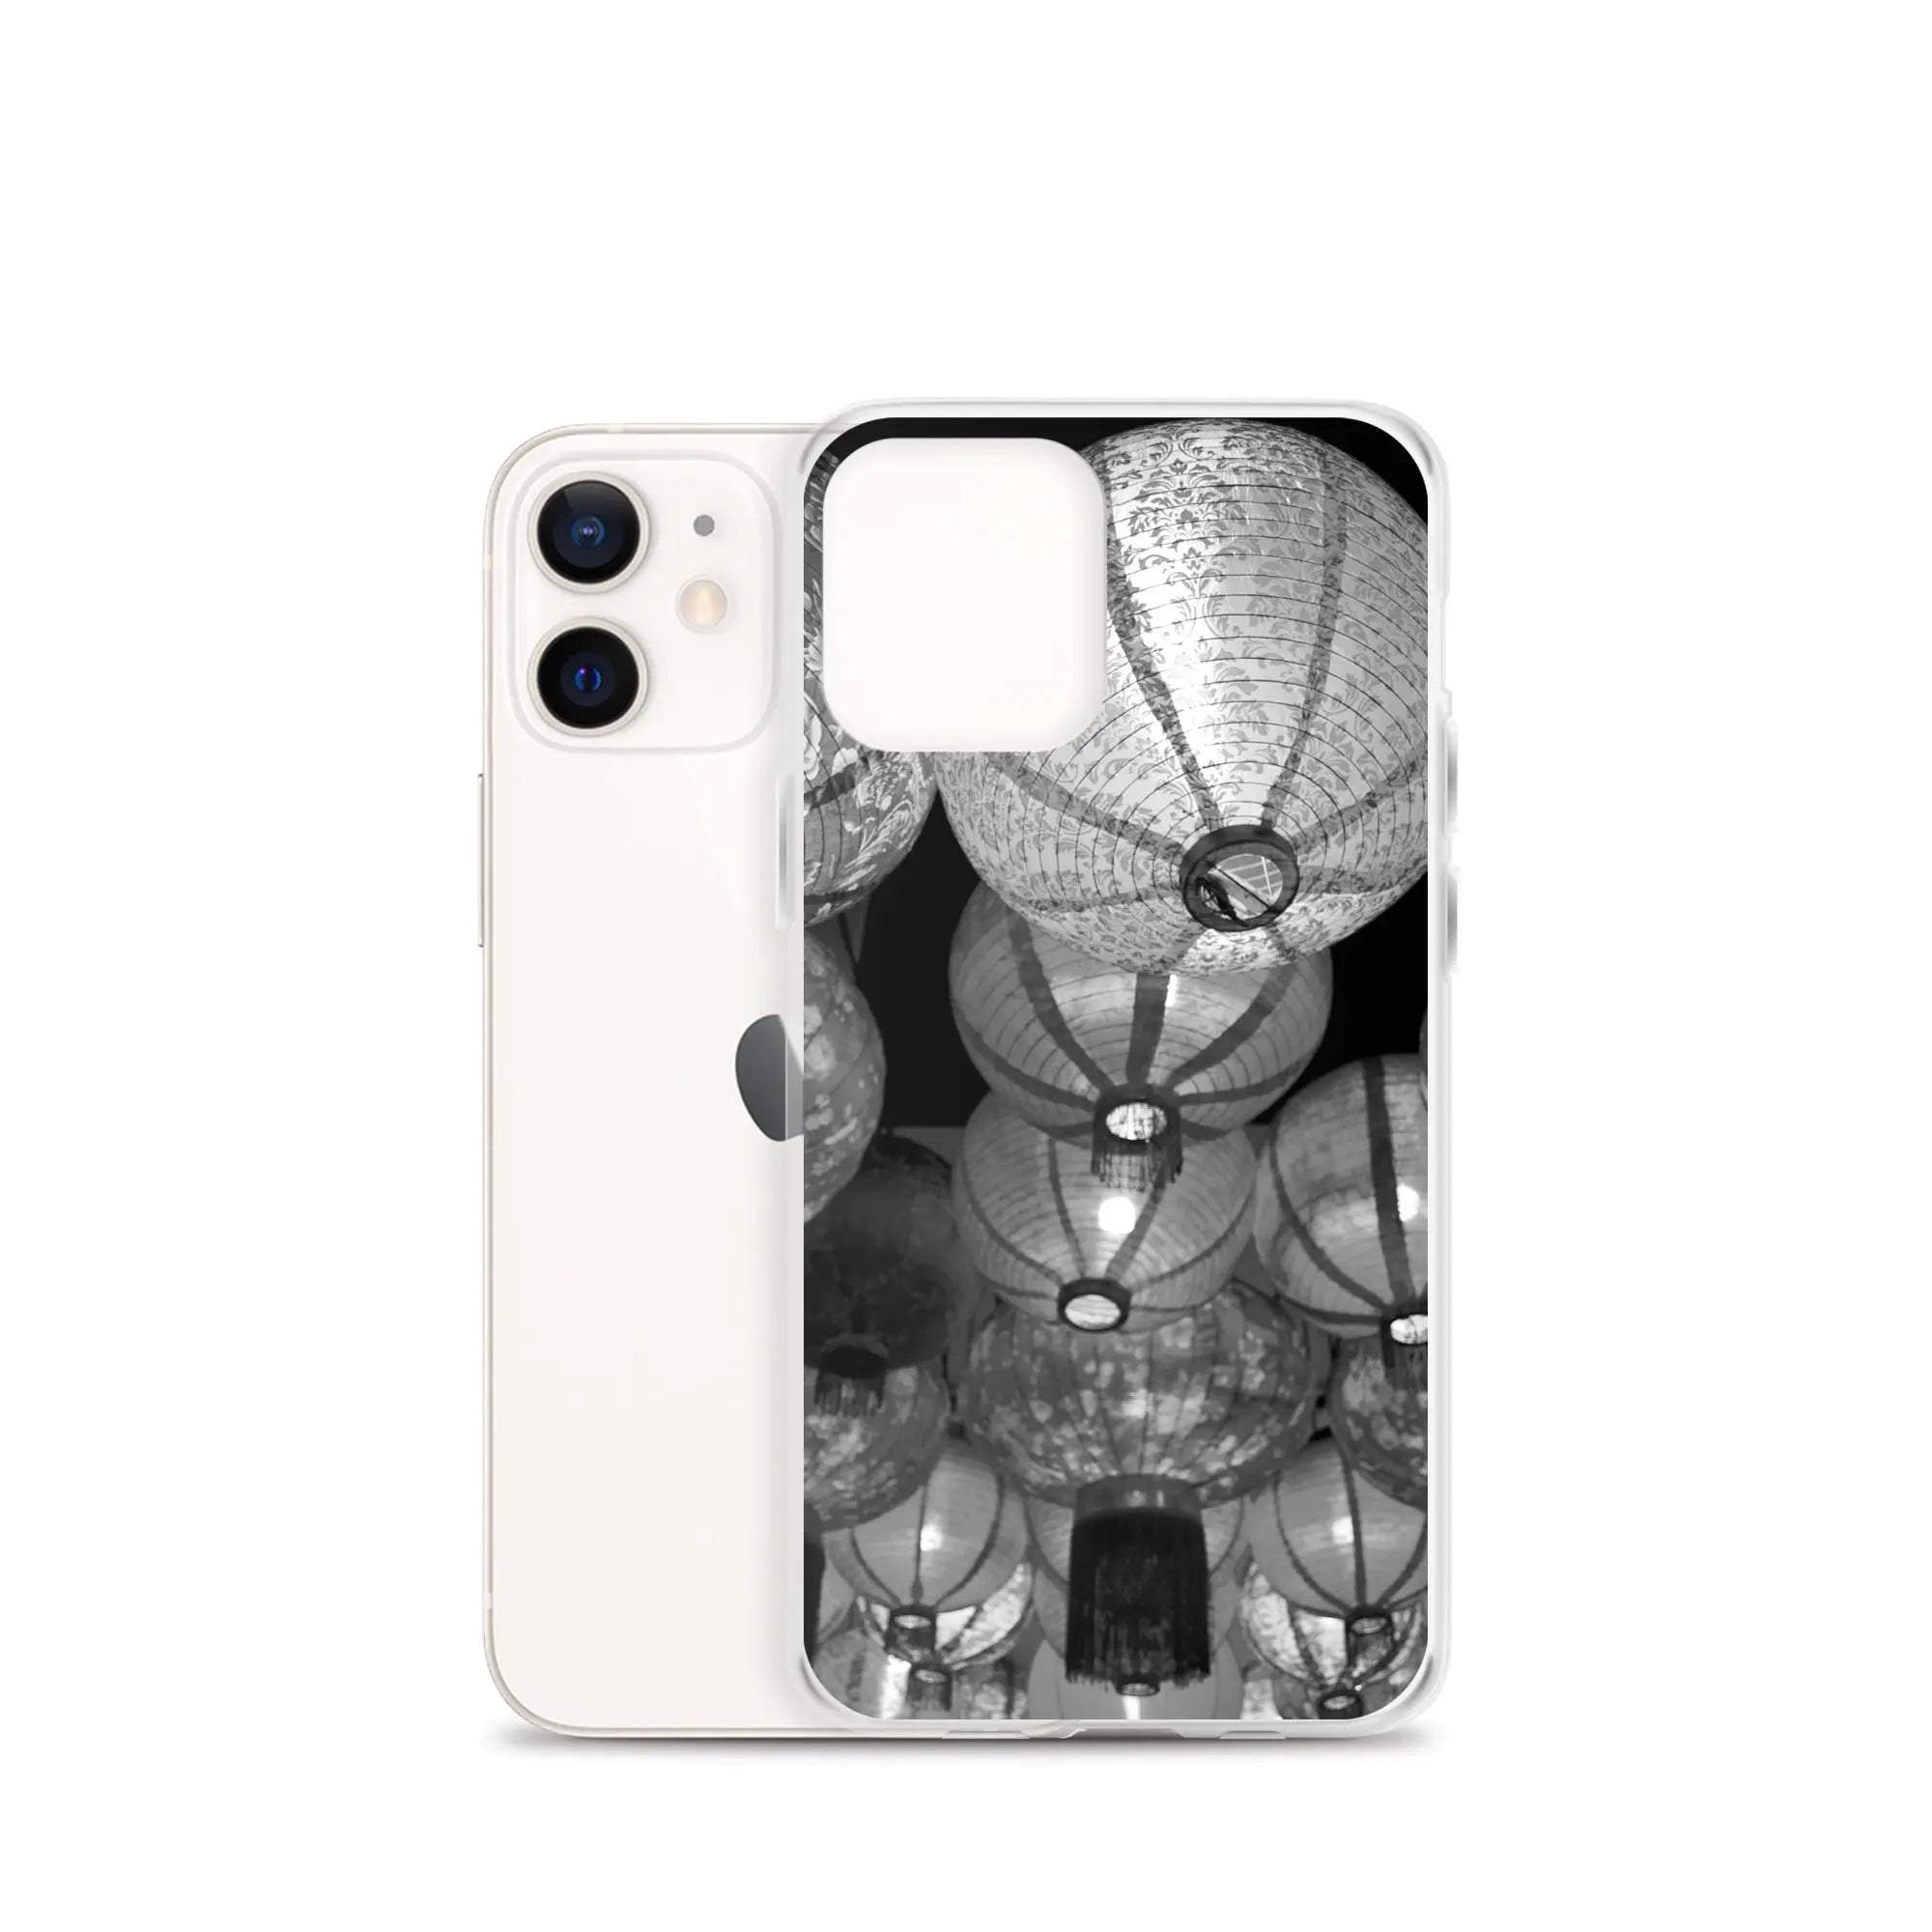 Raise The Red Lanterns - Designer Travels Art Iphone Case - Black And White - Iphone 12 Mini - Mobile Phone Cases